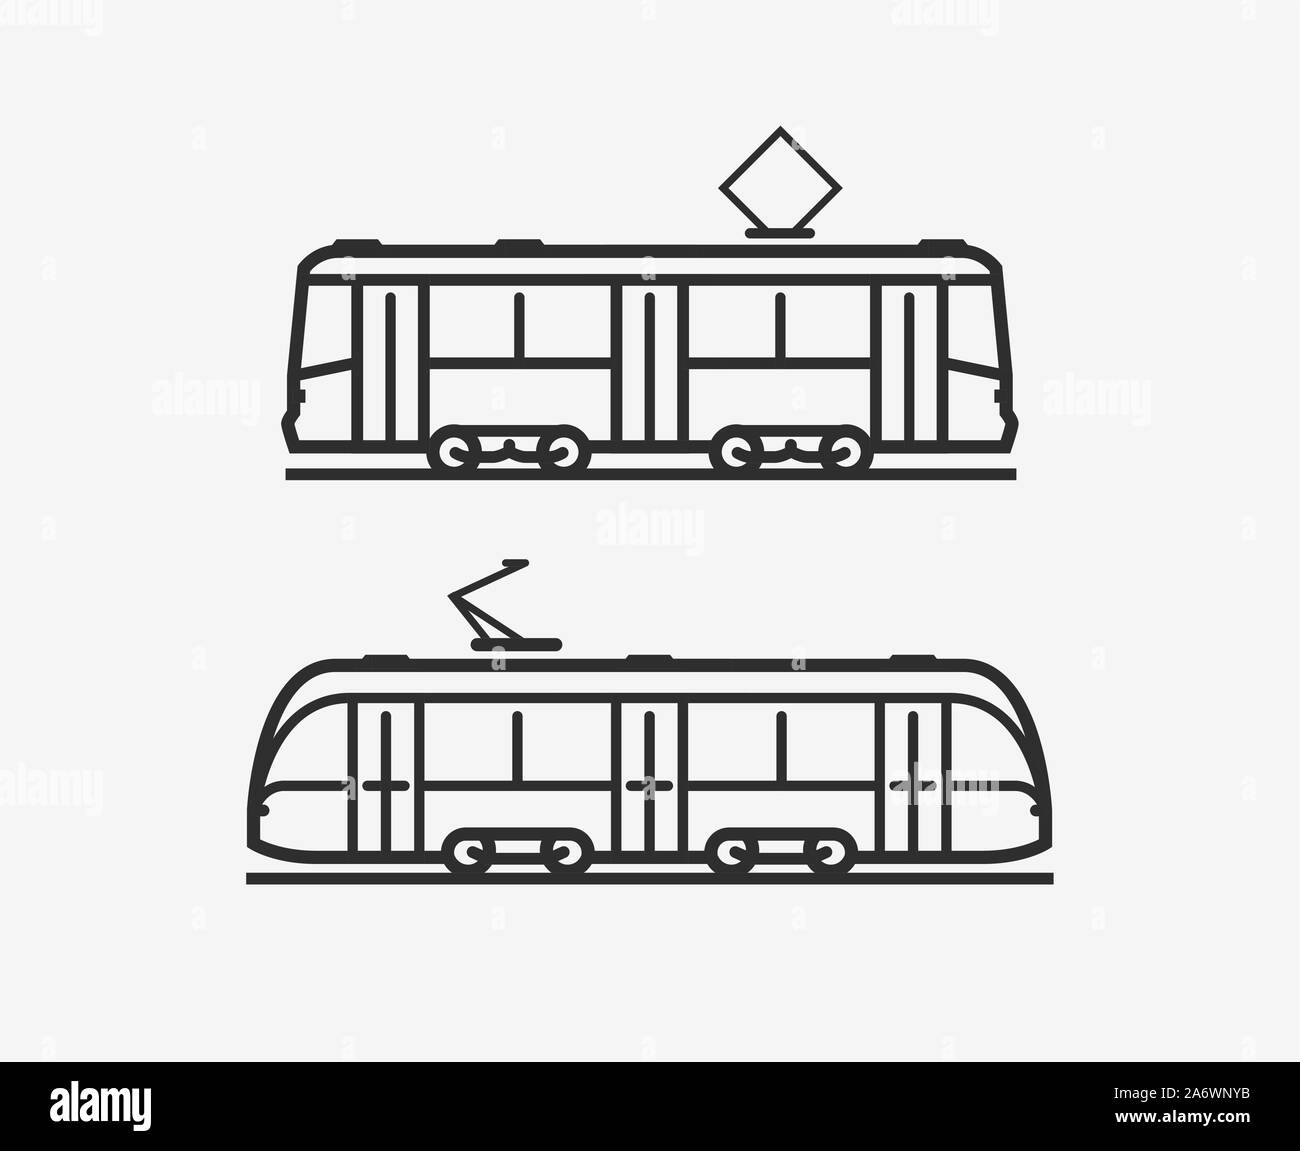 Tram icon. City public transport sign or symbol. Vector illustration Stock Vector